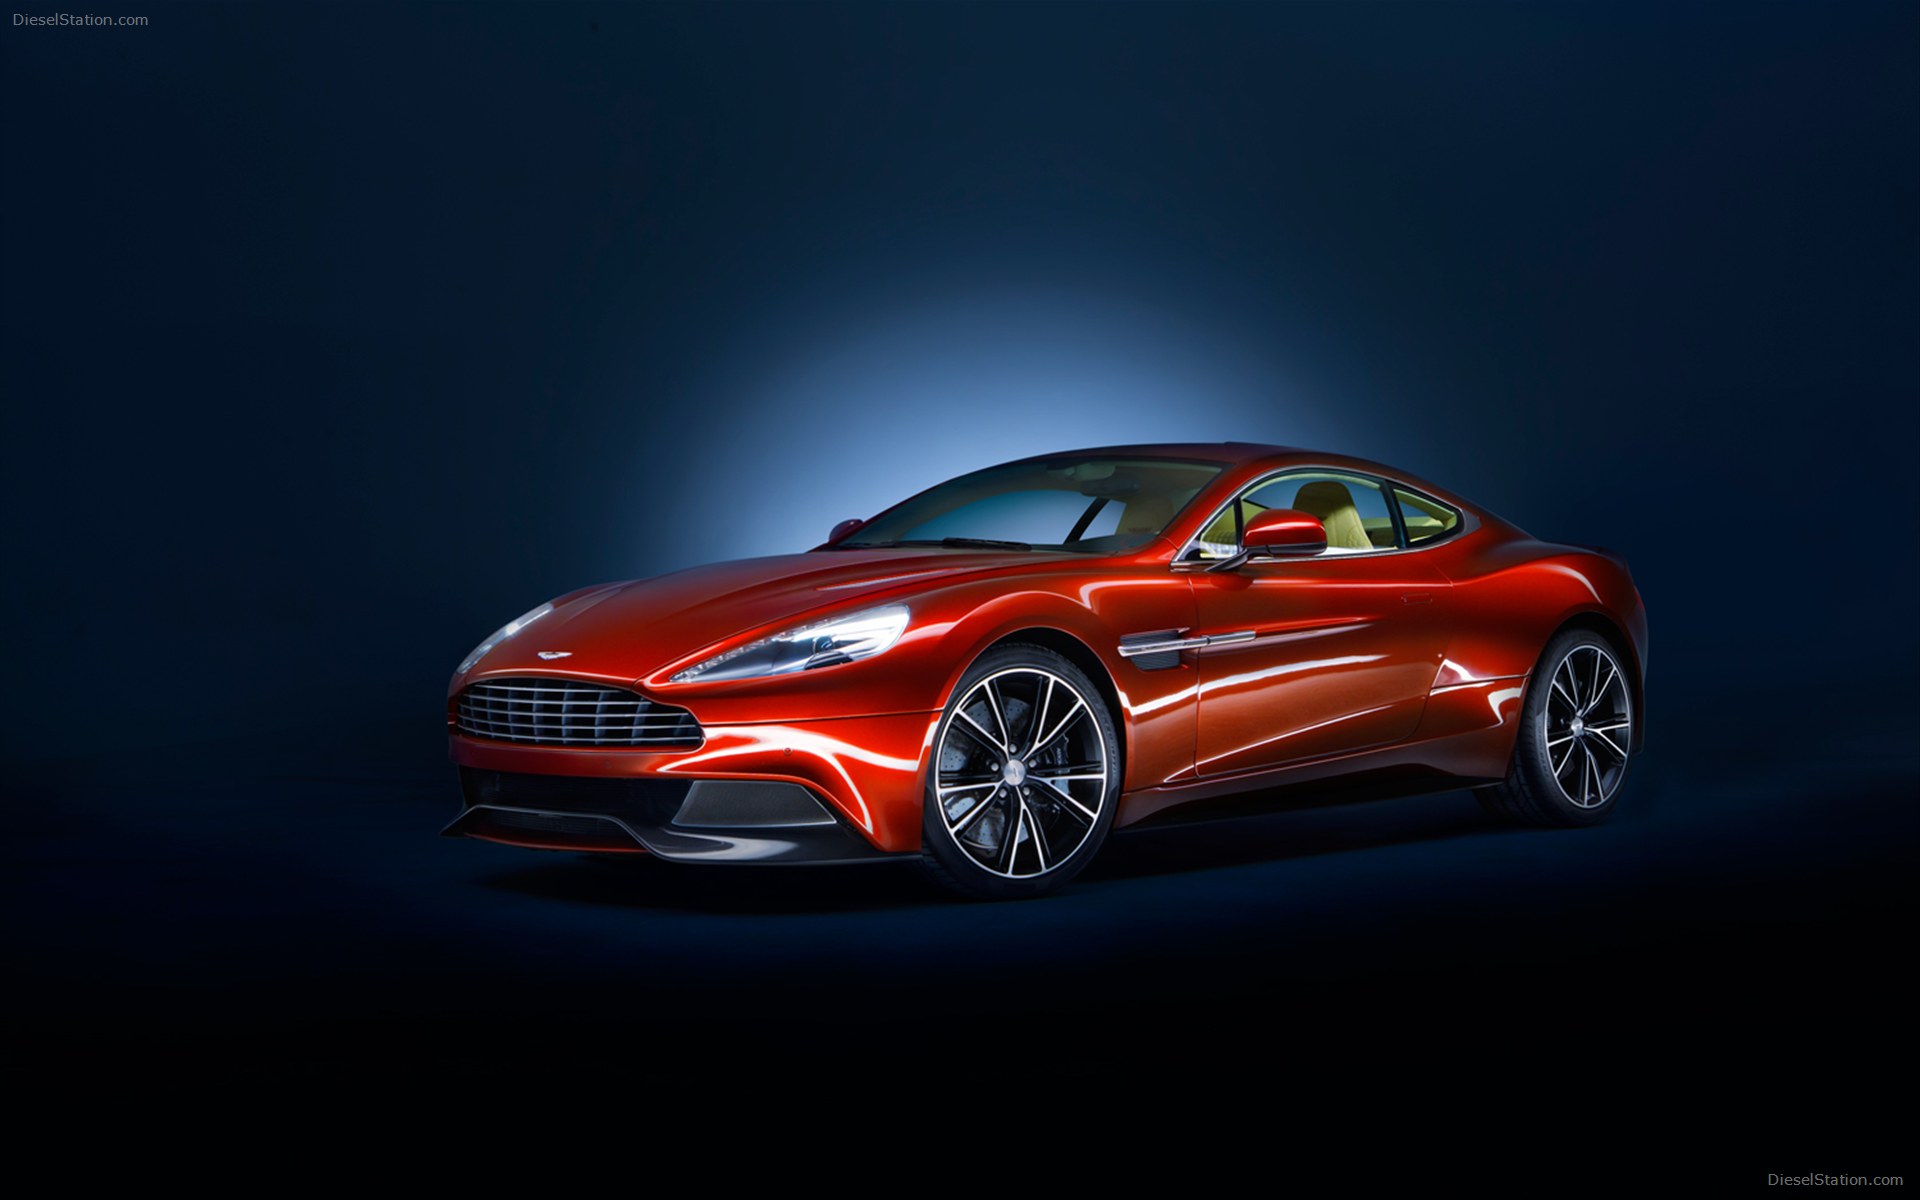 Aston Martin Vanquish Widescreen Exotic Car Image Of